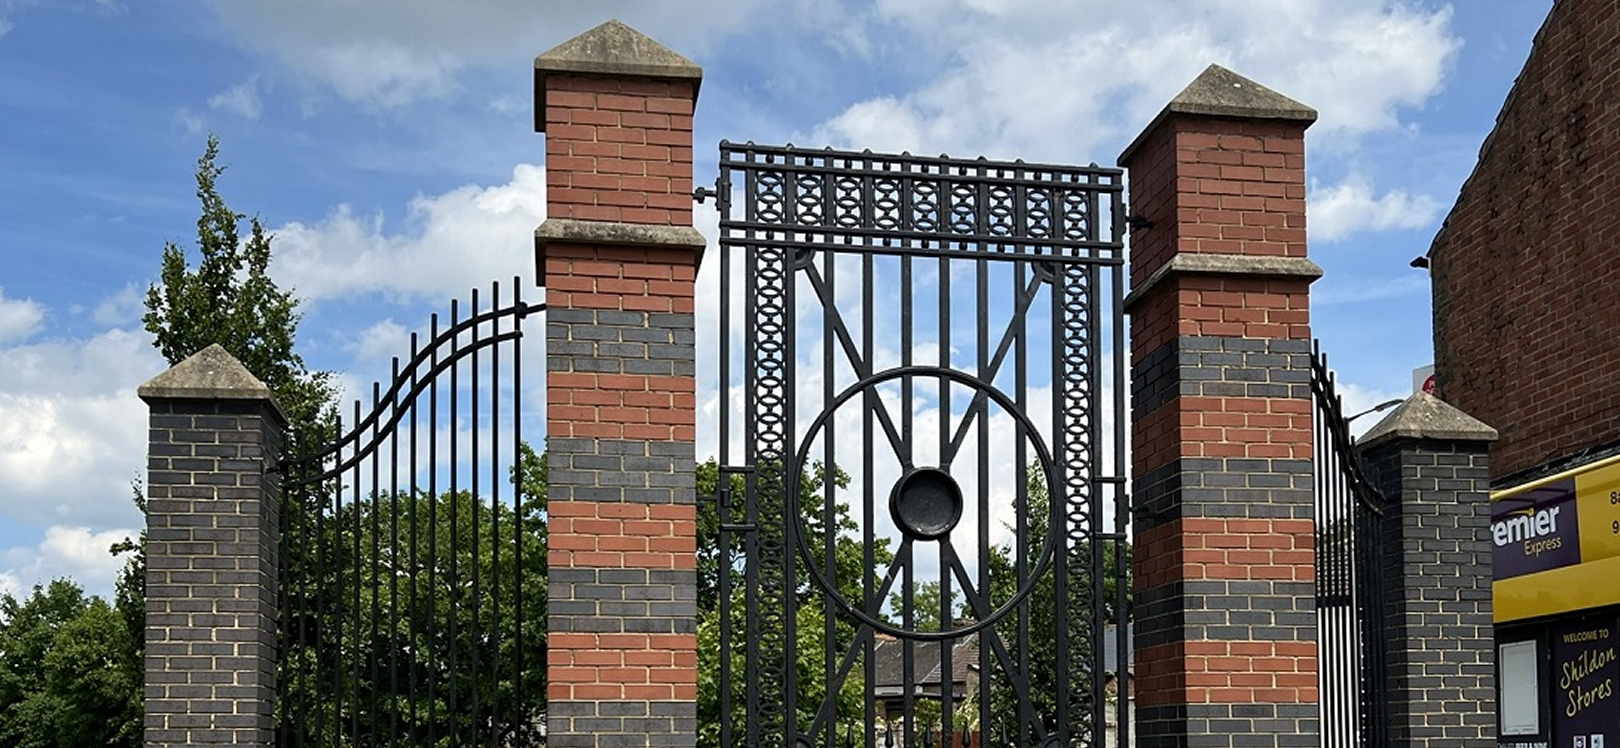 Victorian gates from Euston Station